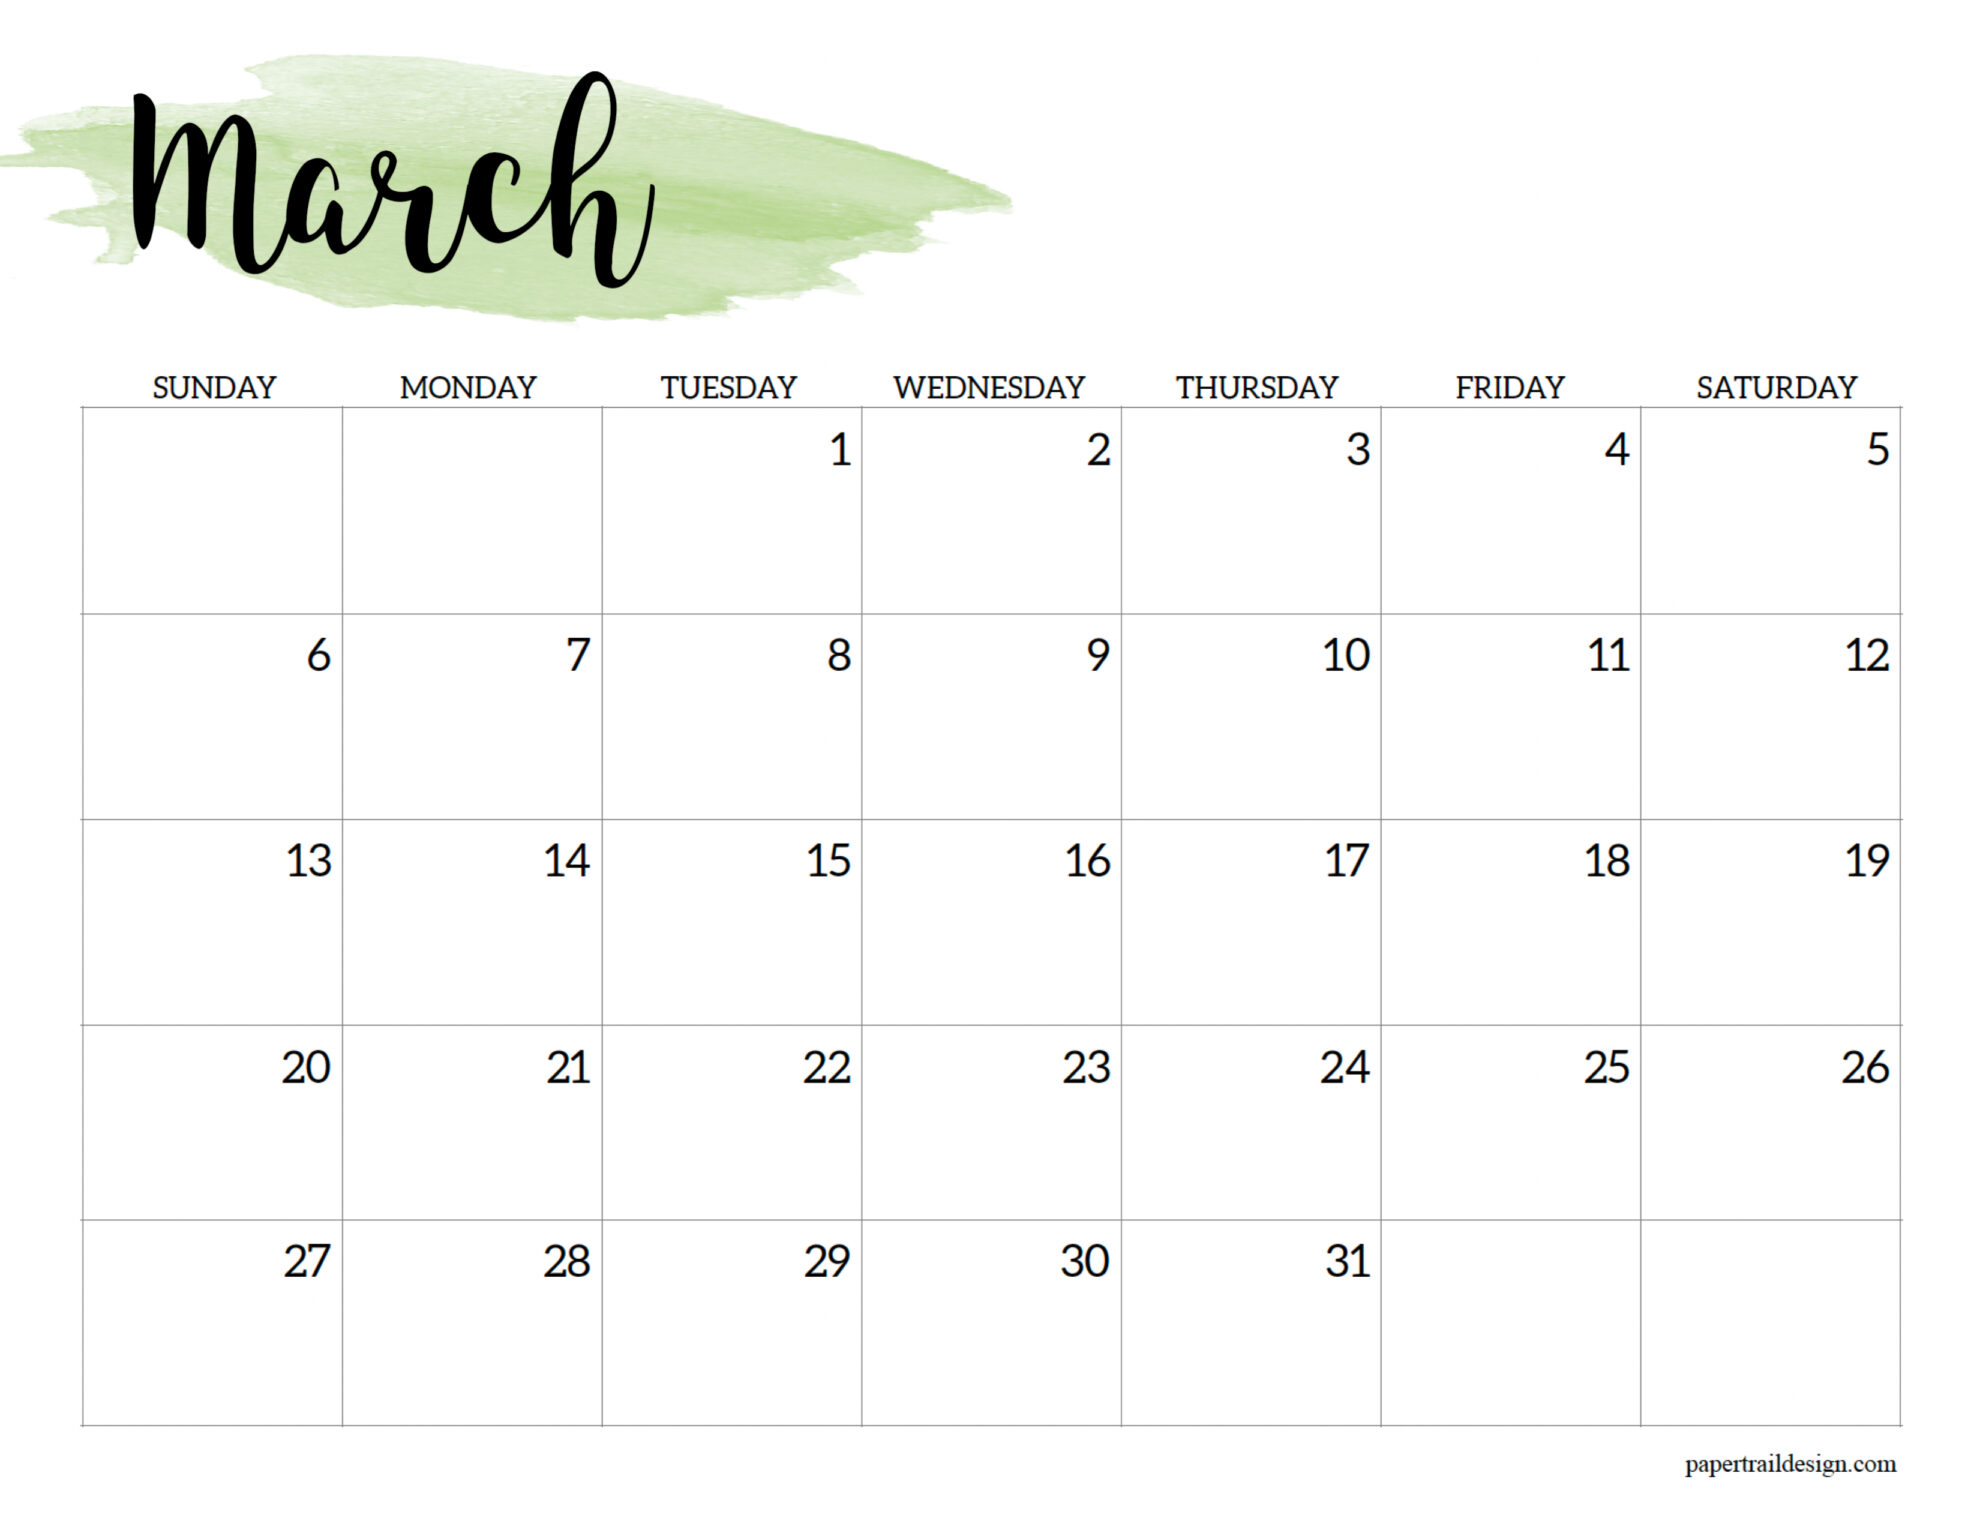 March 2022 Calendar Page 2022 Calendar Printable - Watercolor - Paper Trail Design